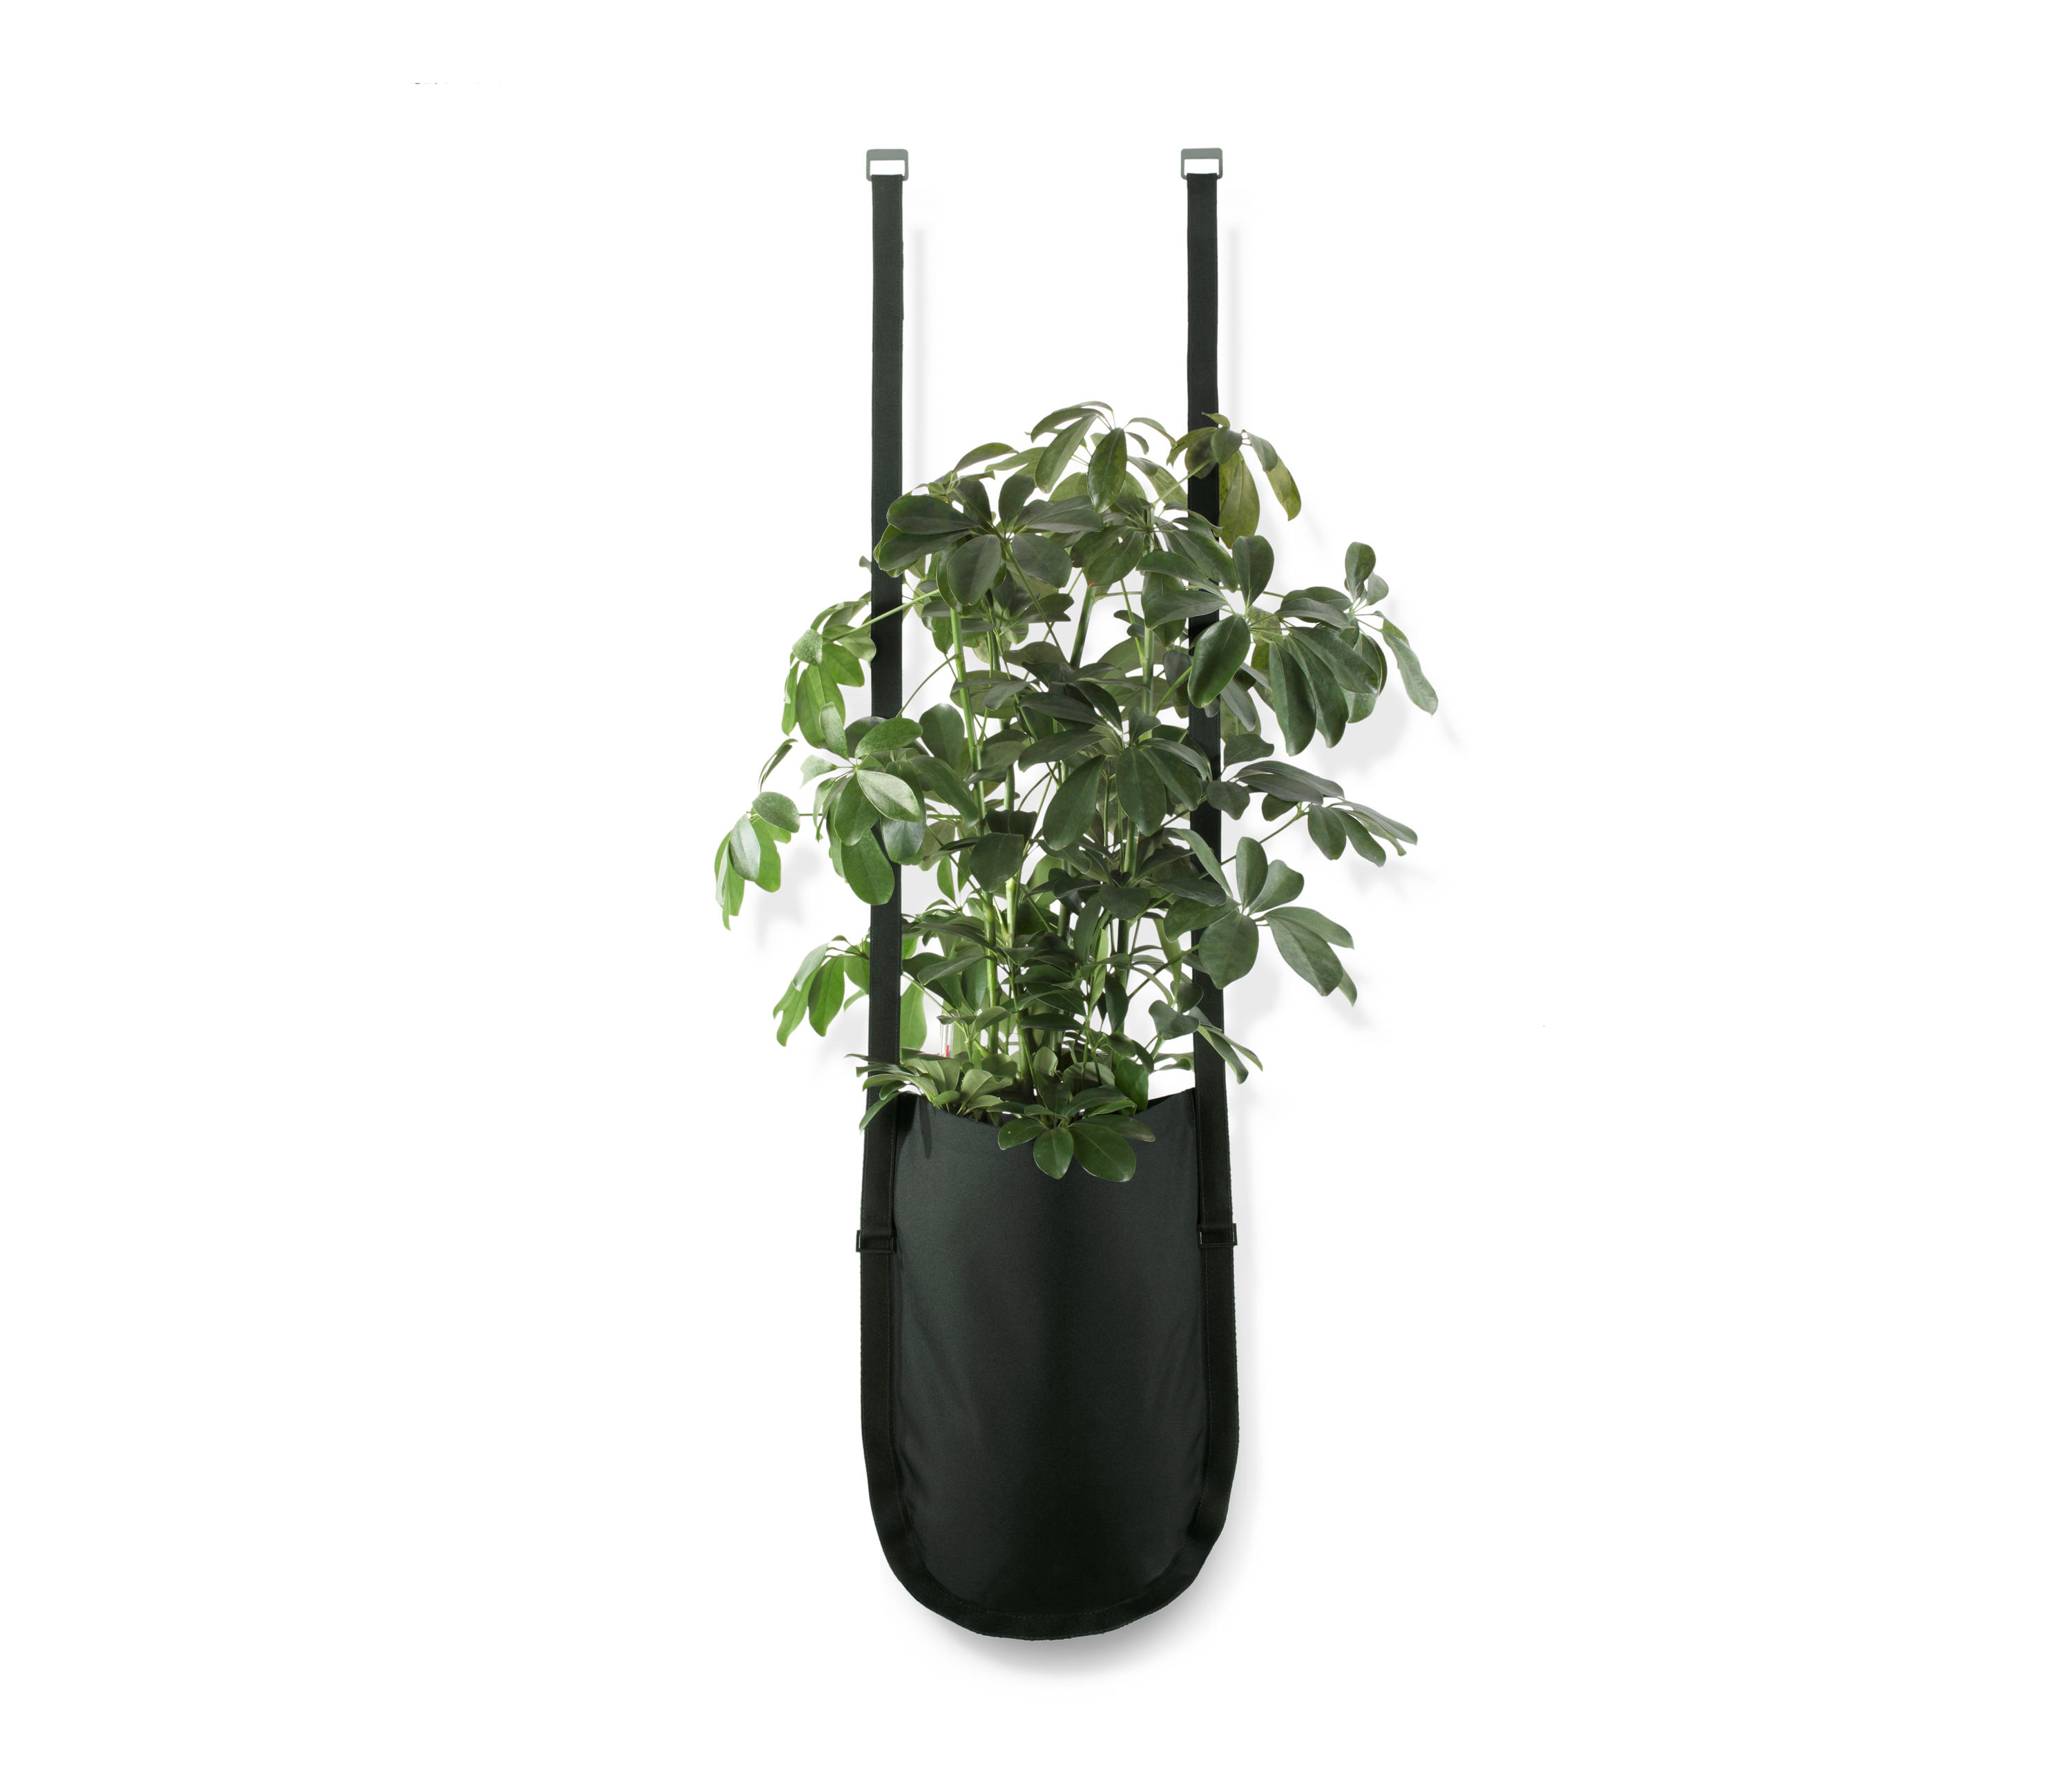 URBAN GARDEN plant bag & designer furniture